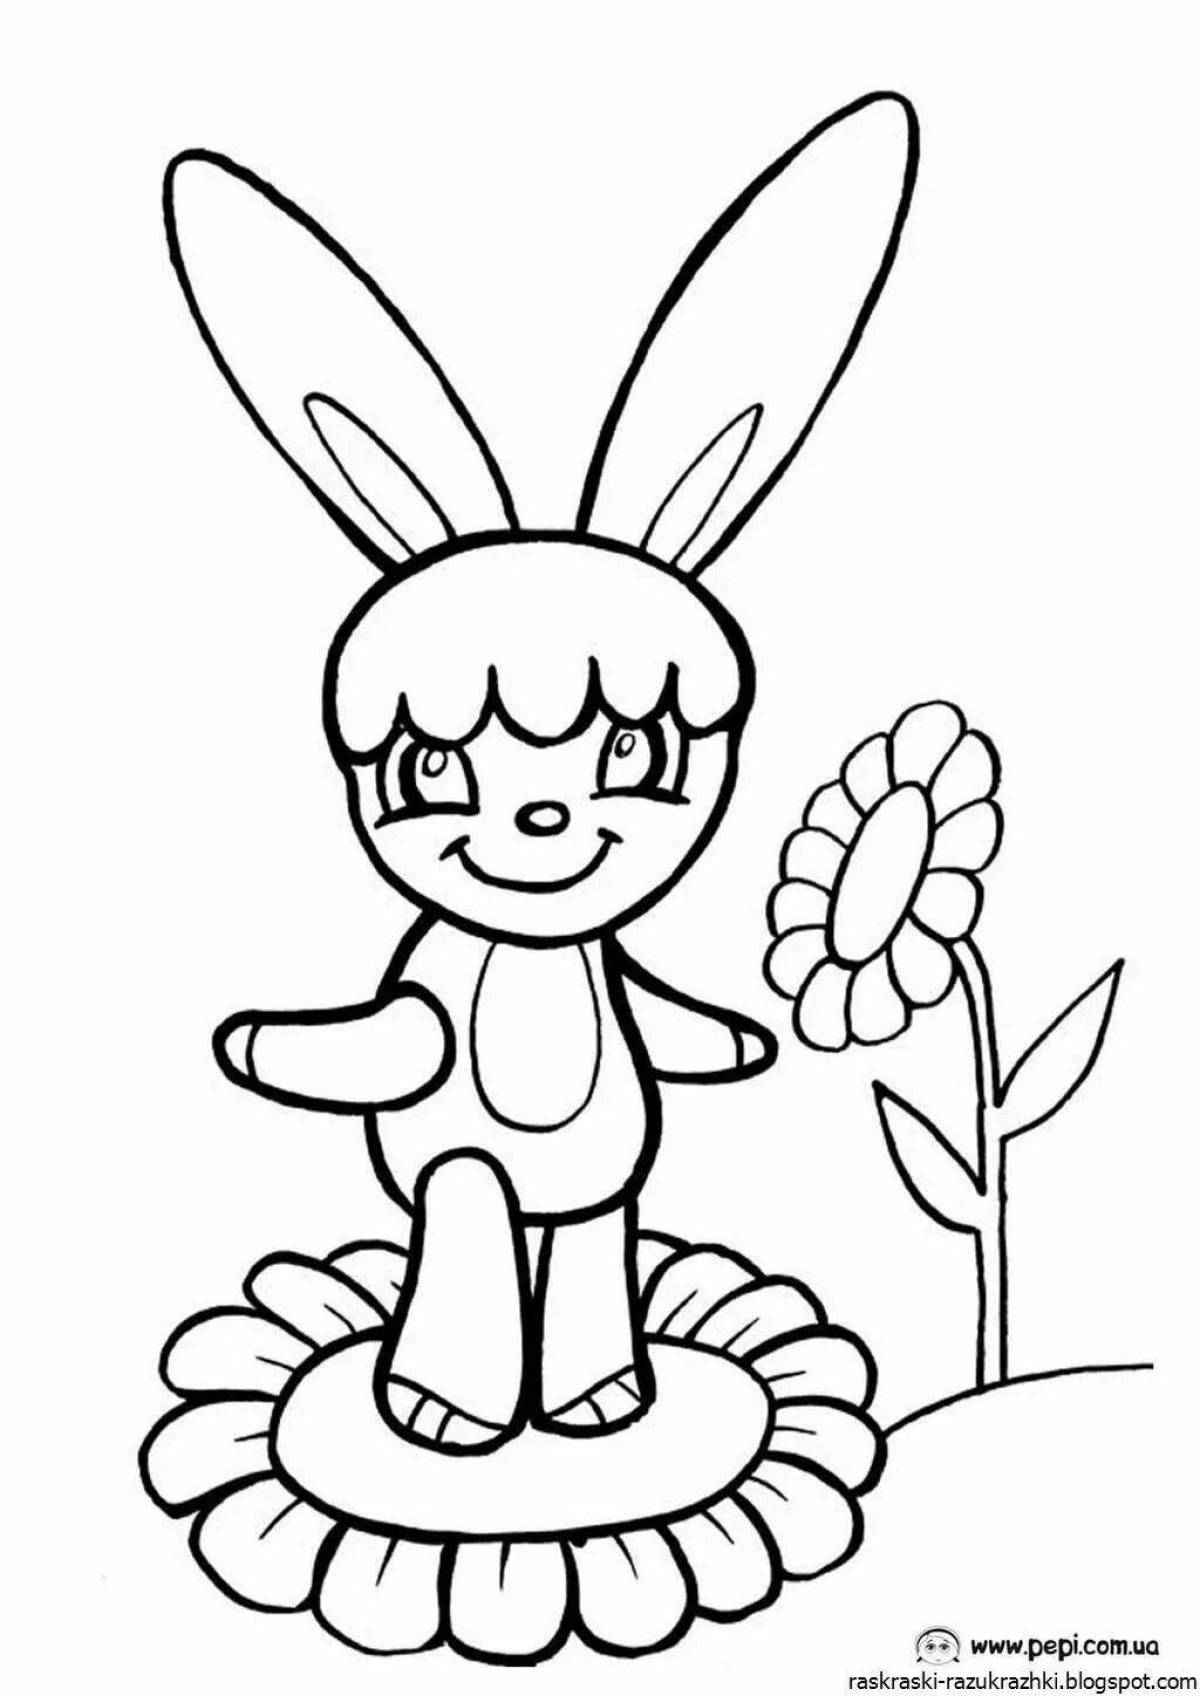 Joyful bunny doll coloring